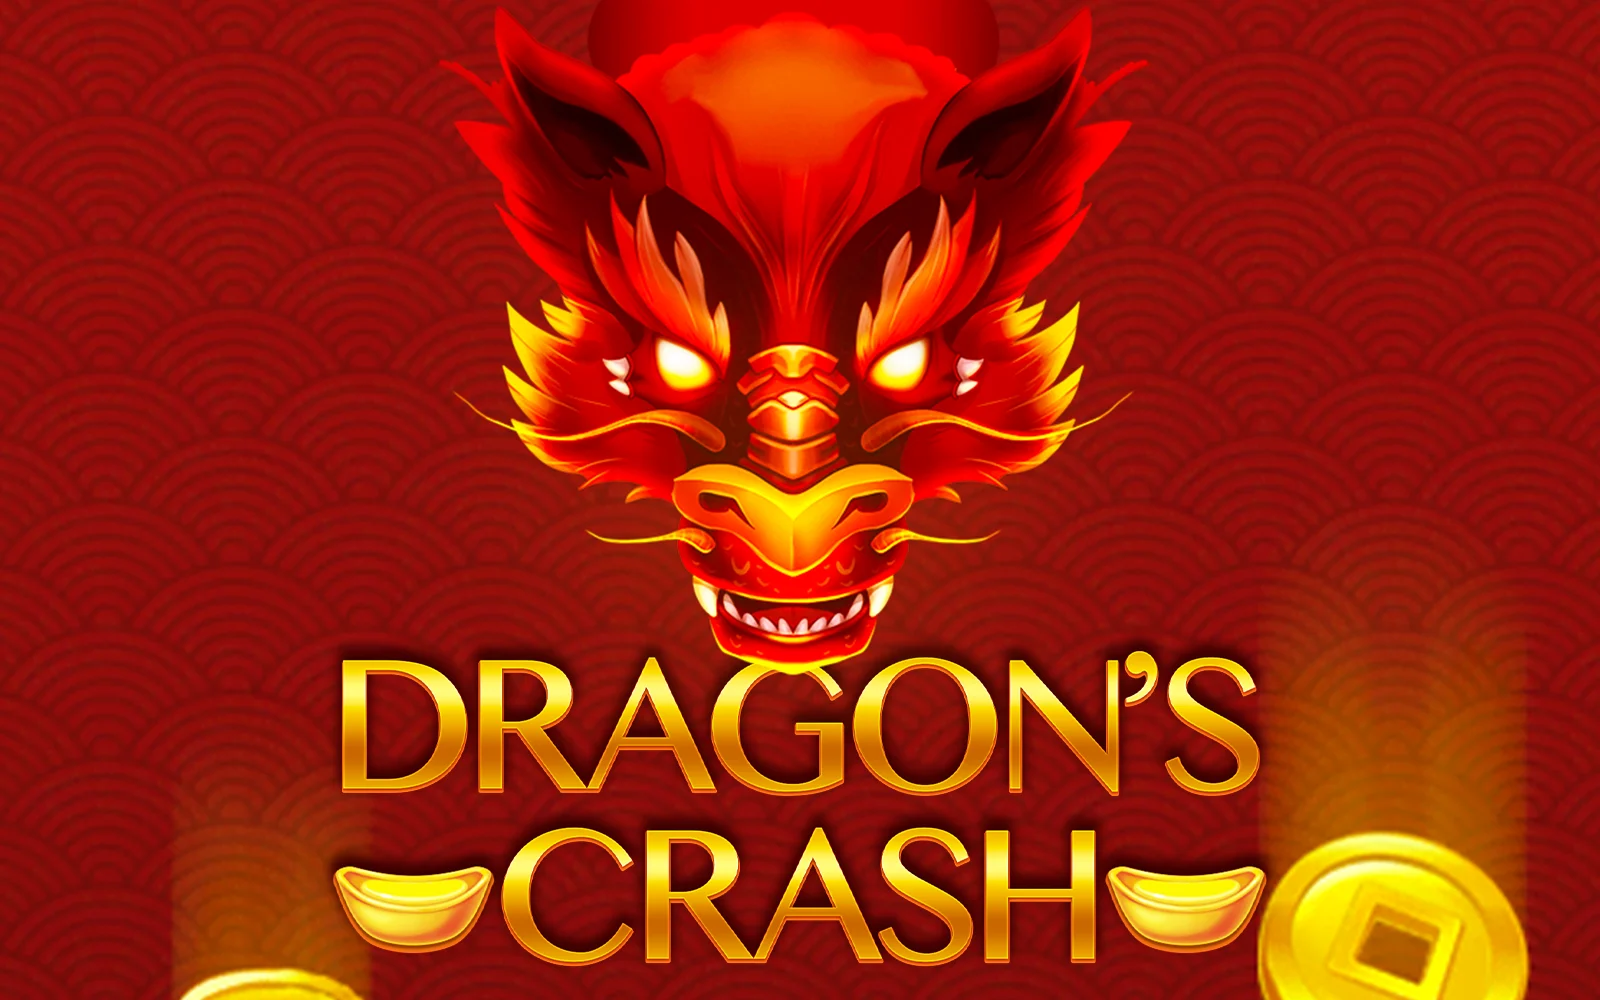 Play Dragon's Crash on Starcasino.be online casino